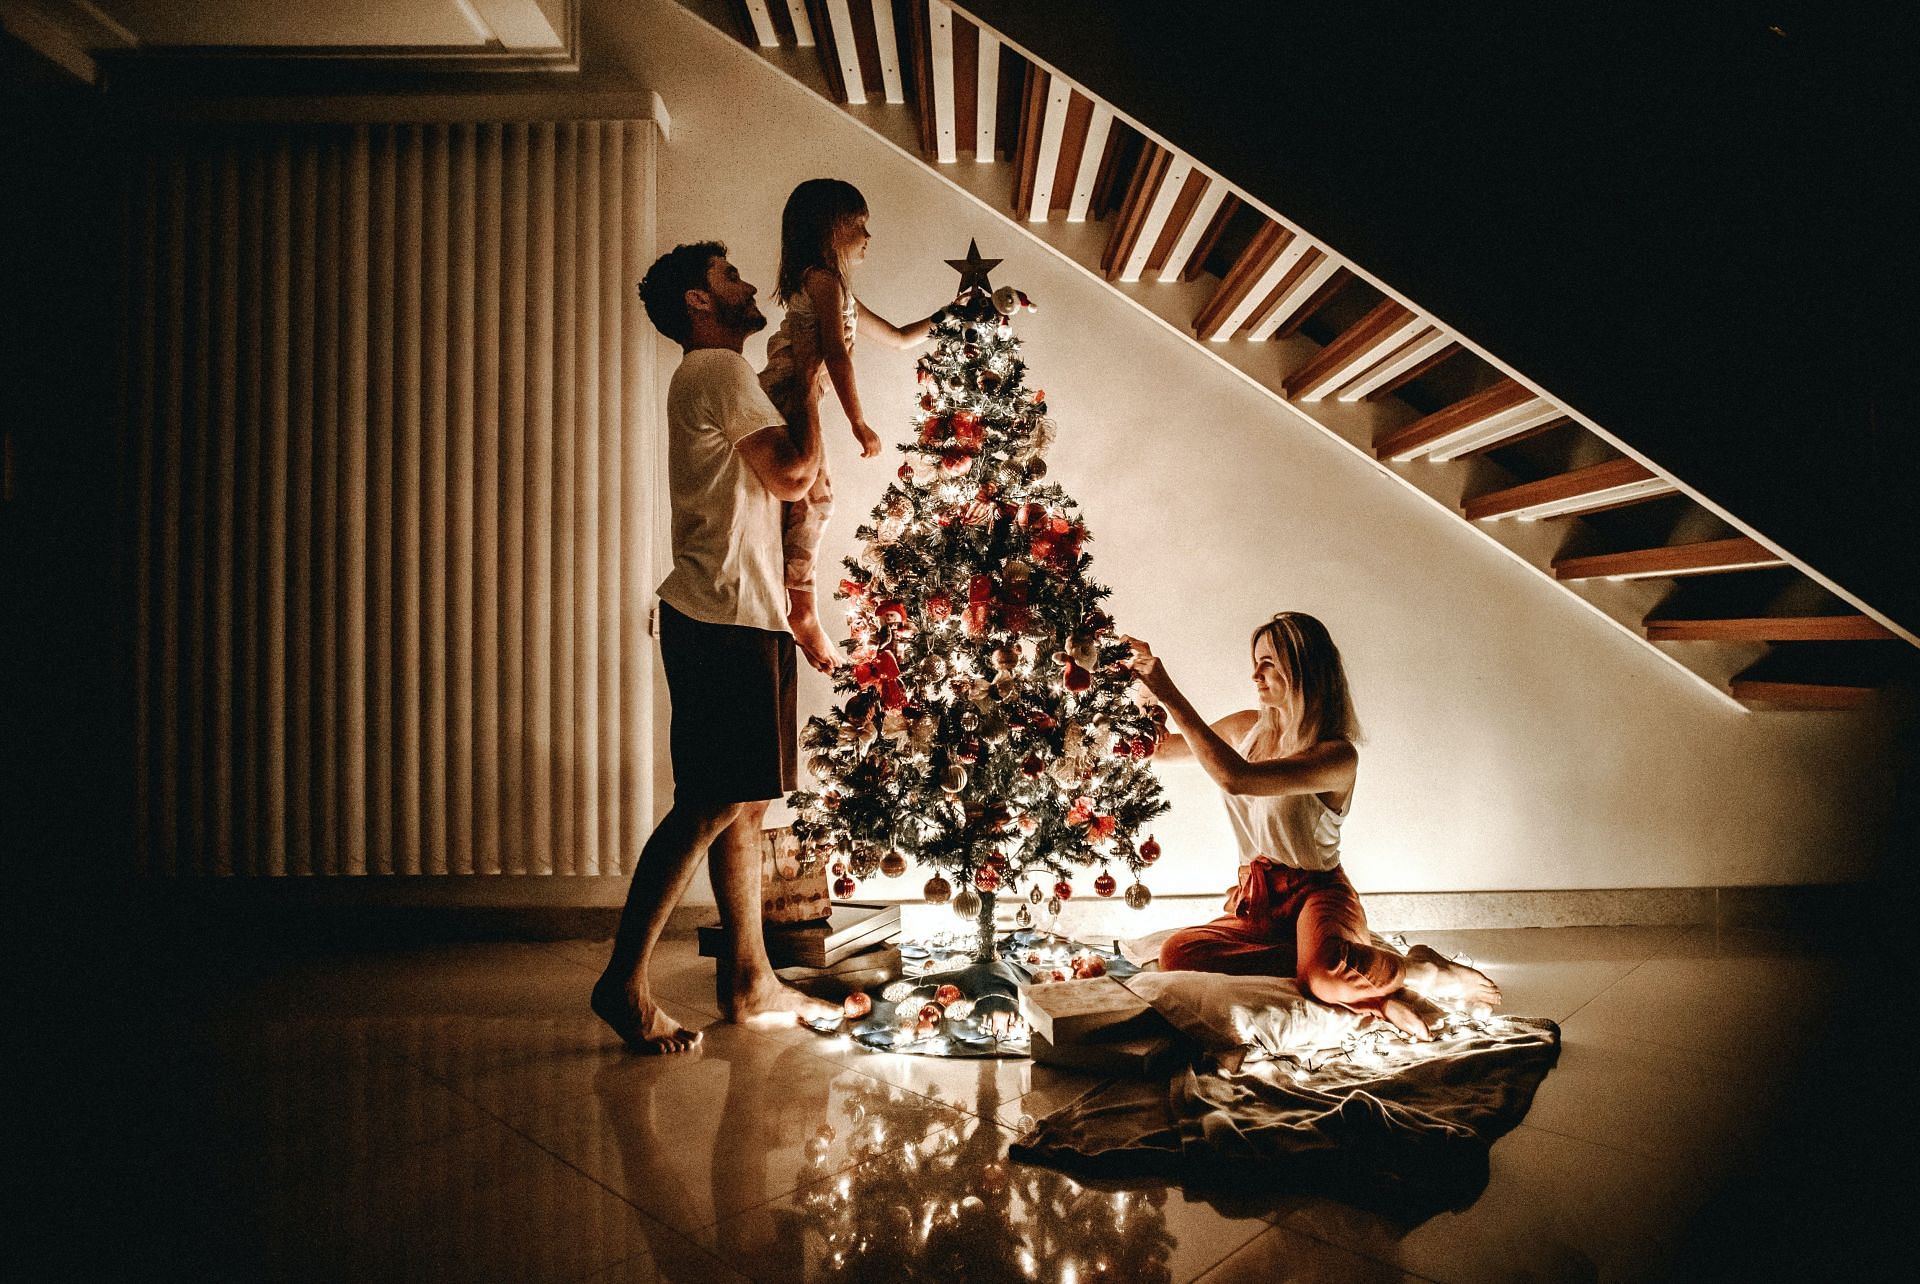 Establish control in the holiday season. (Image via Pexels/Jonathan Borba)